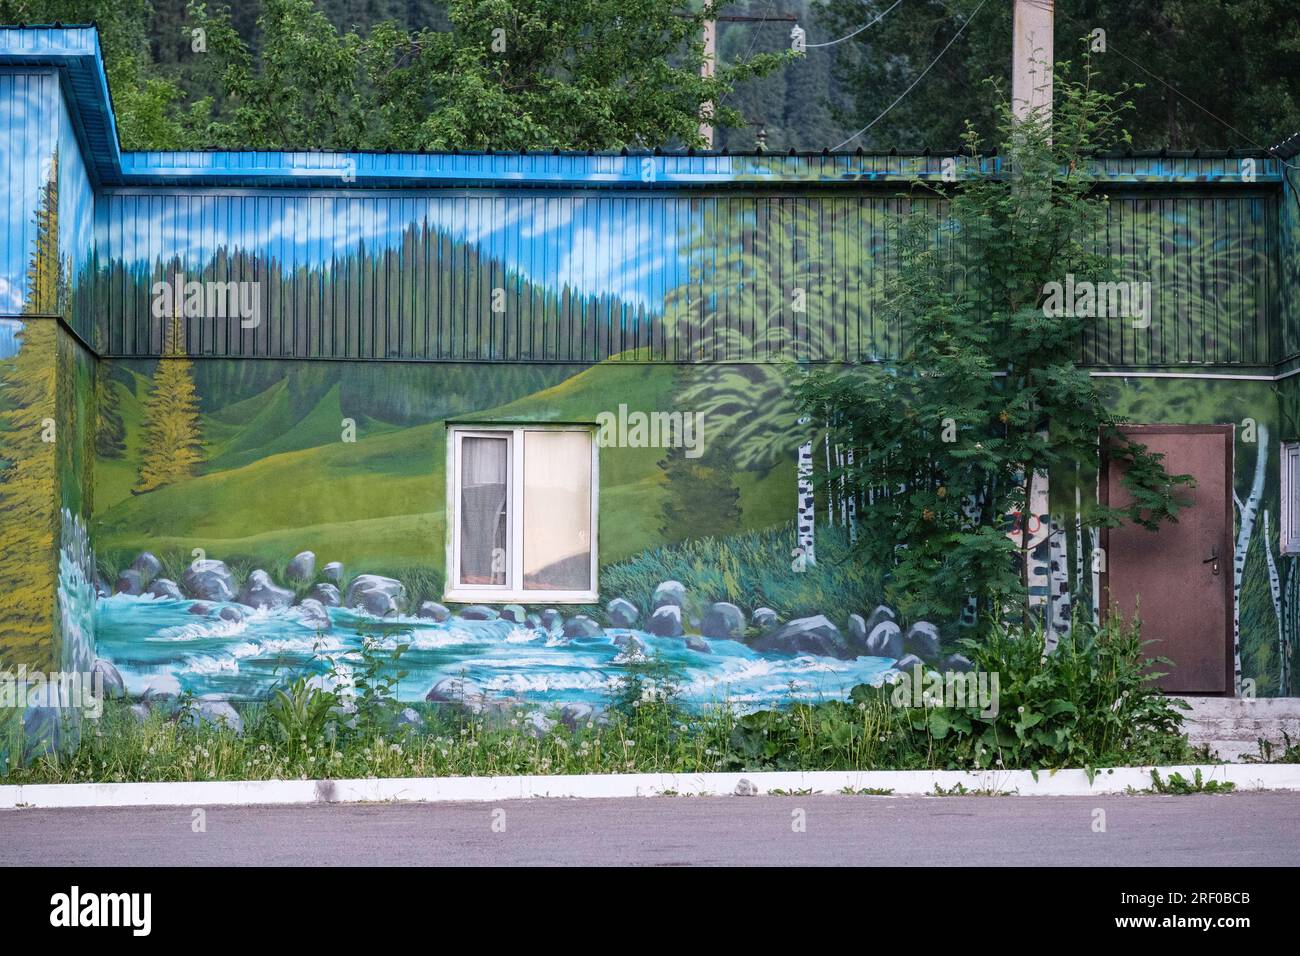 Kazakhstan. Mural of Mountain Scene Painted on Side of House. Stock Photo